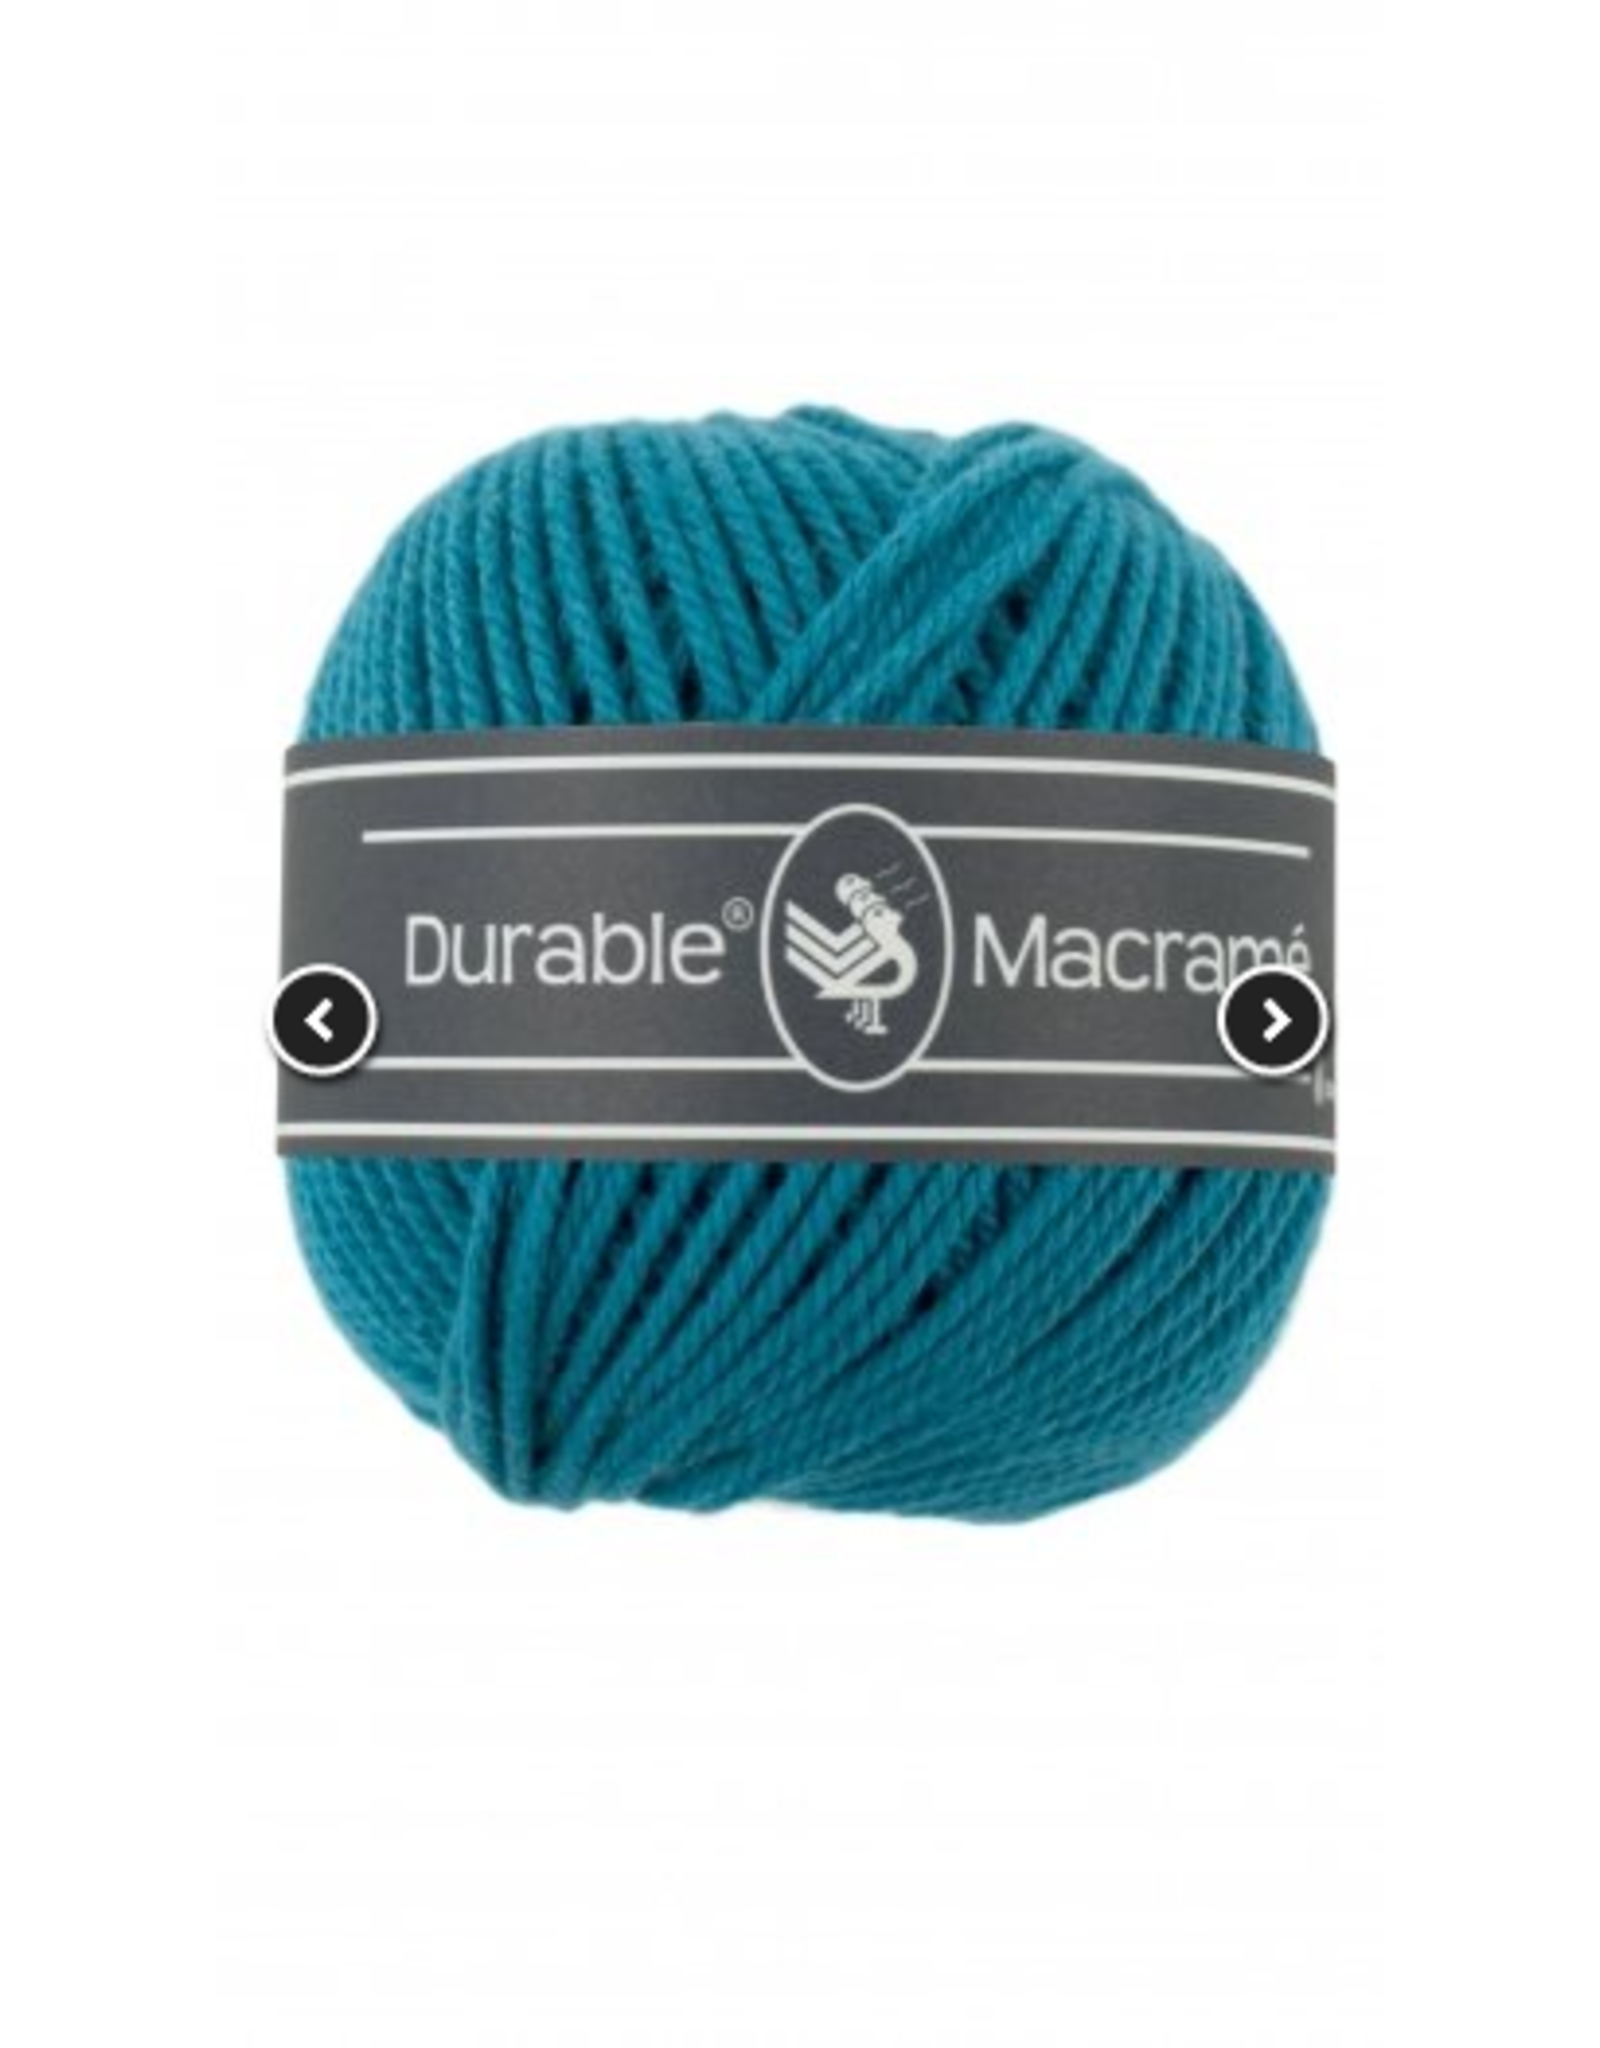 Durable Macrame 371 turquoise